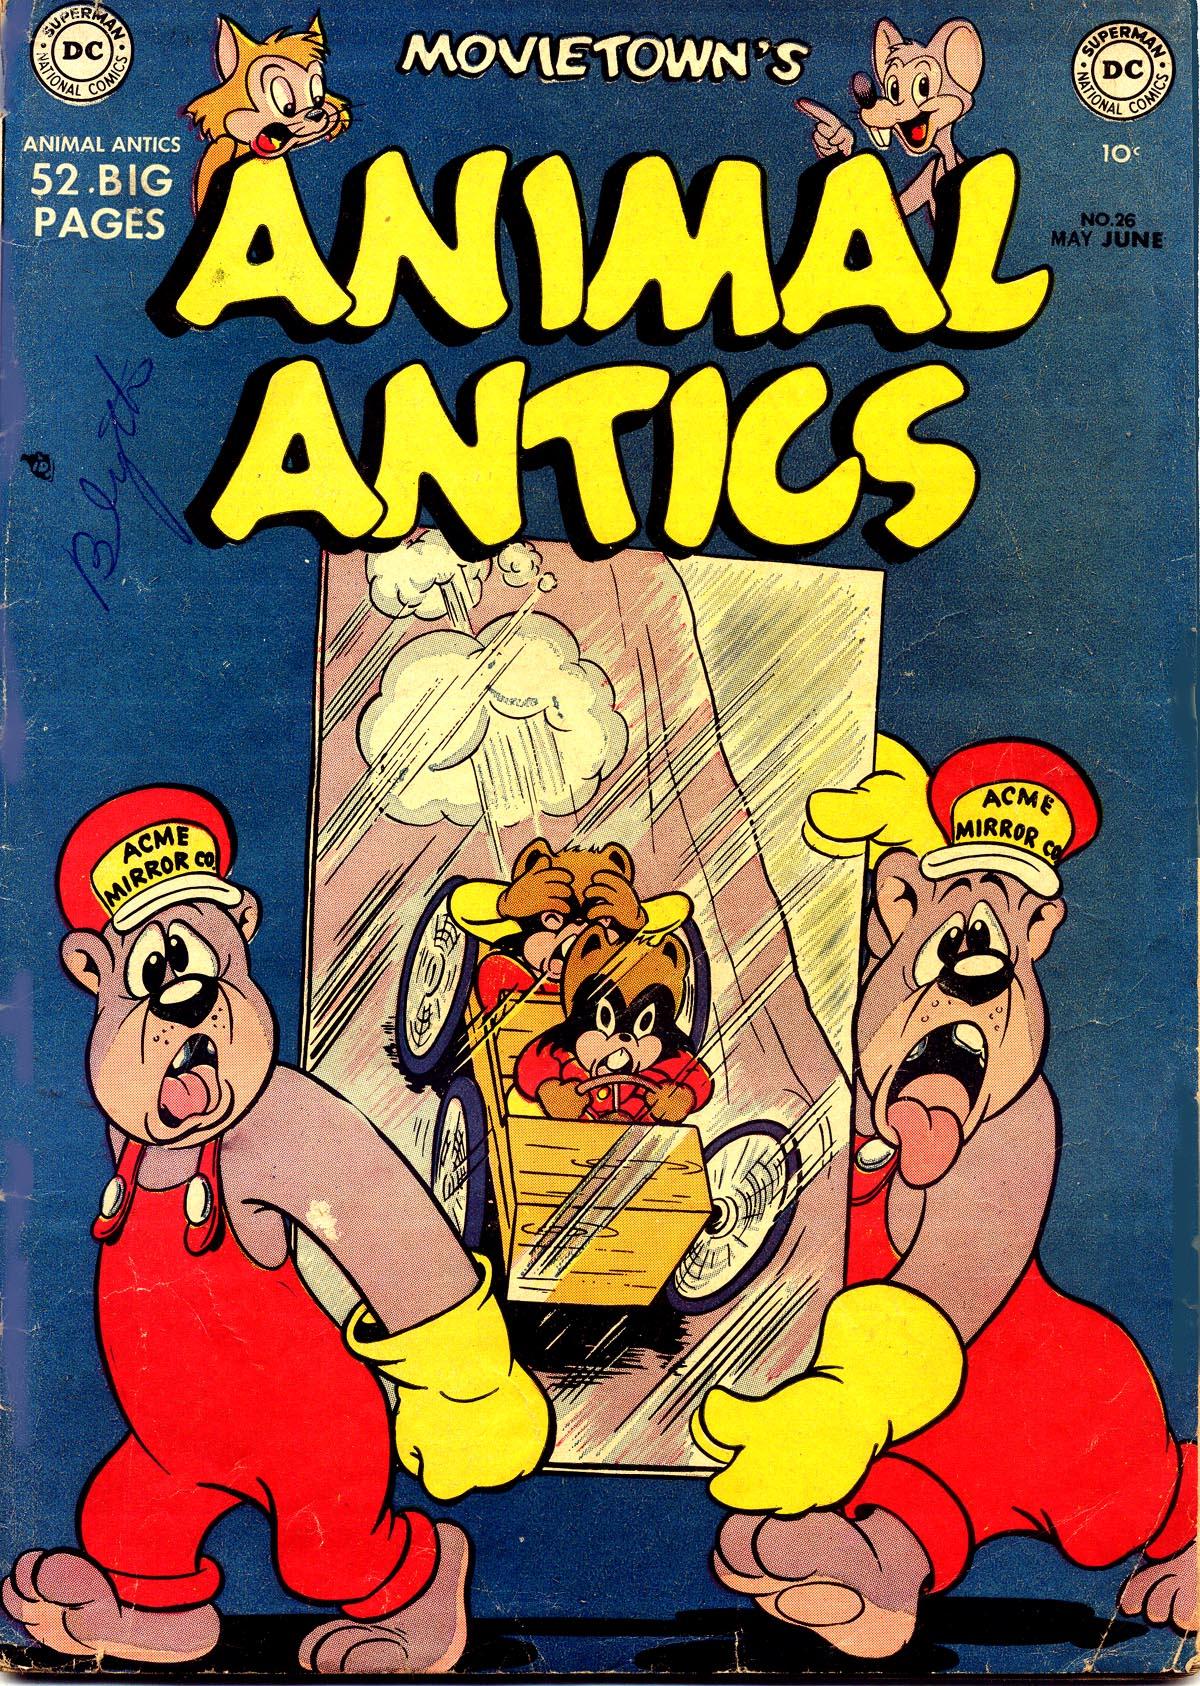 Movietown's Animal Antics Vol. 1 #26